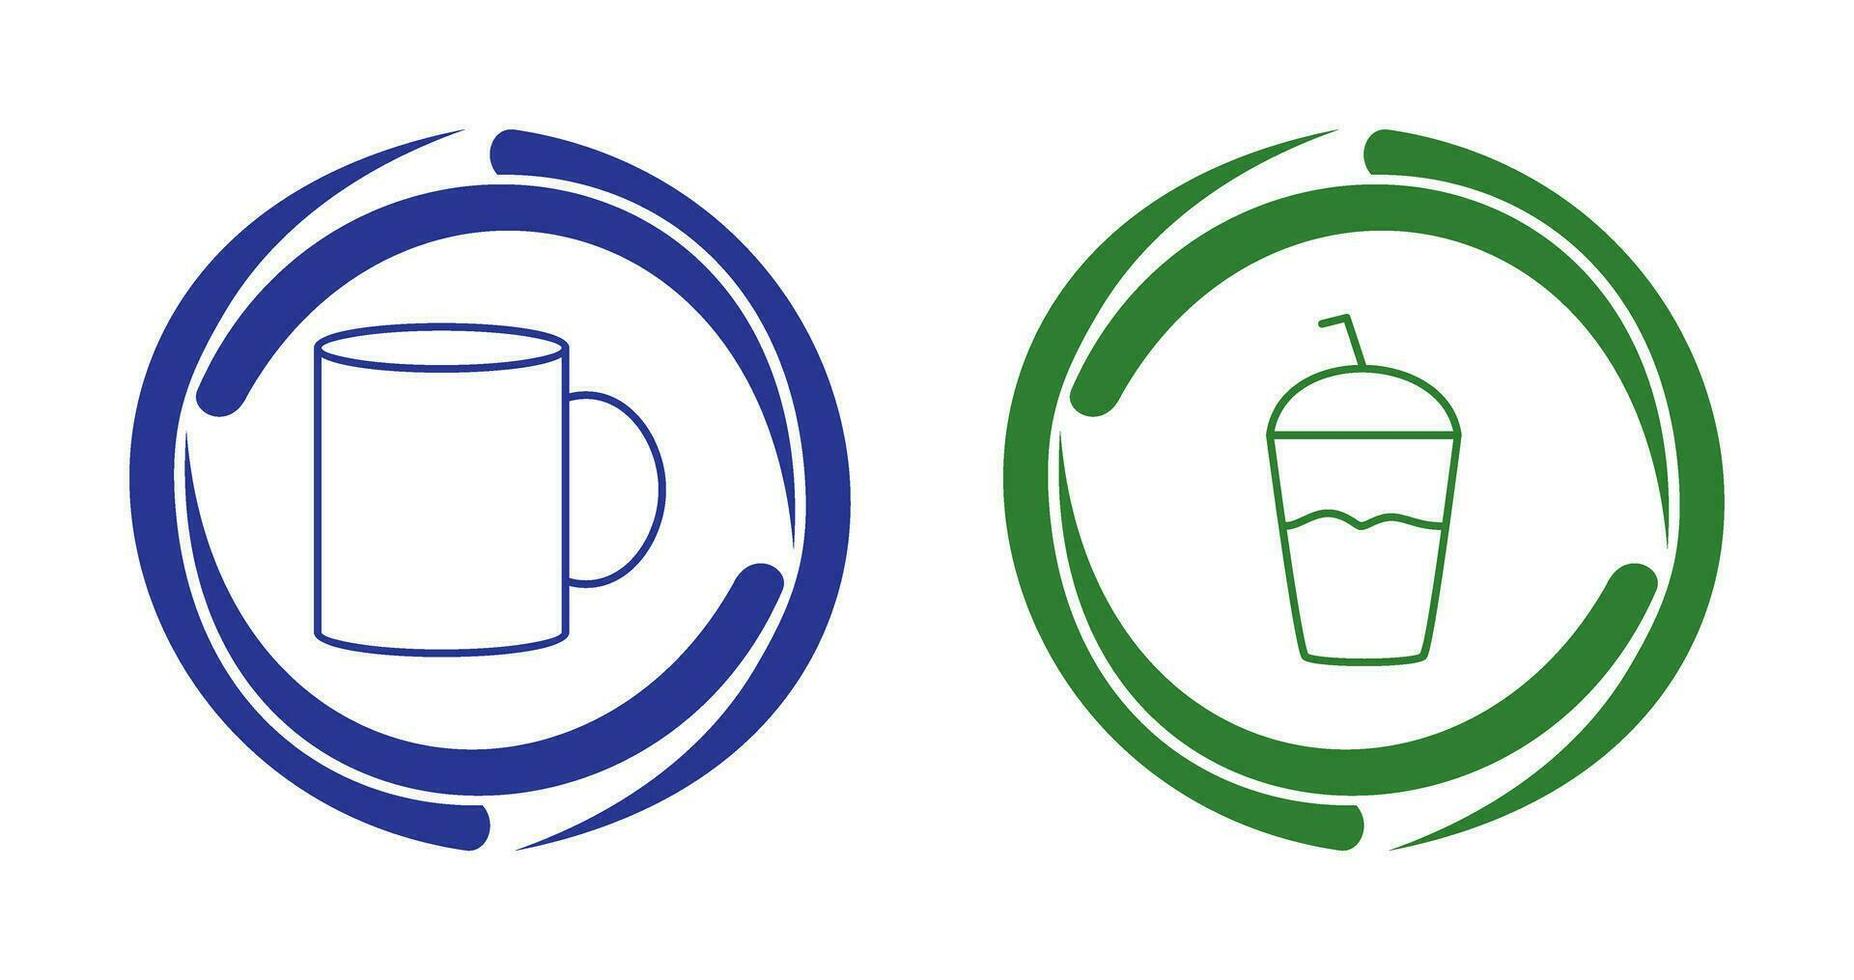 Coffee mug and Frappe Icon vector